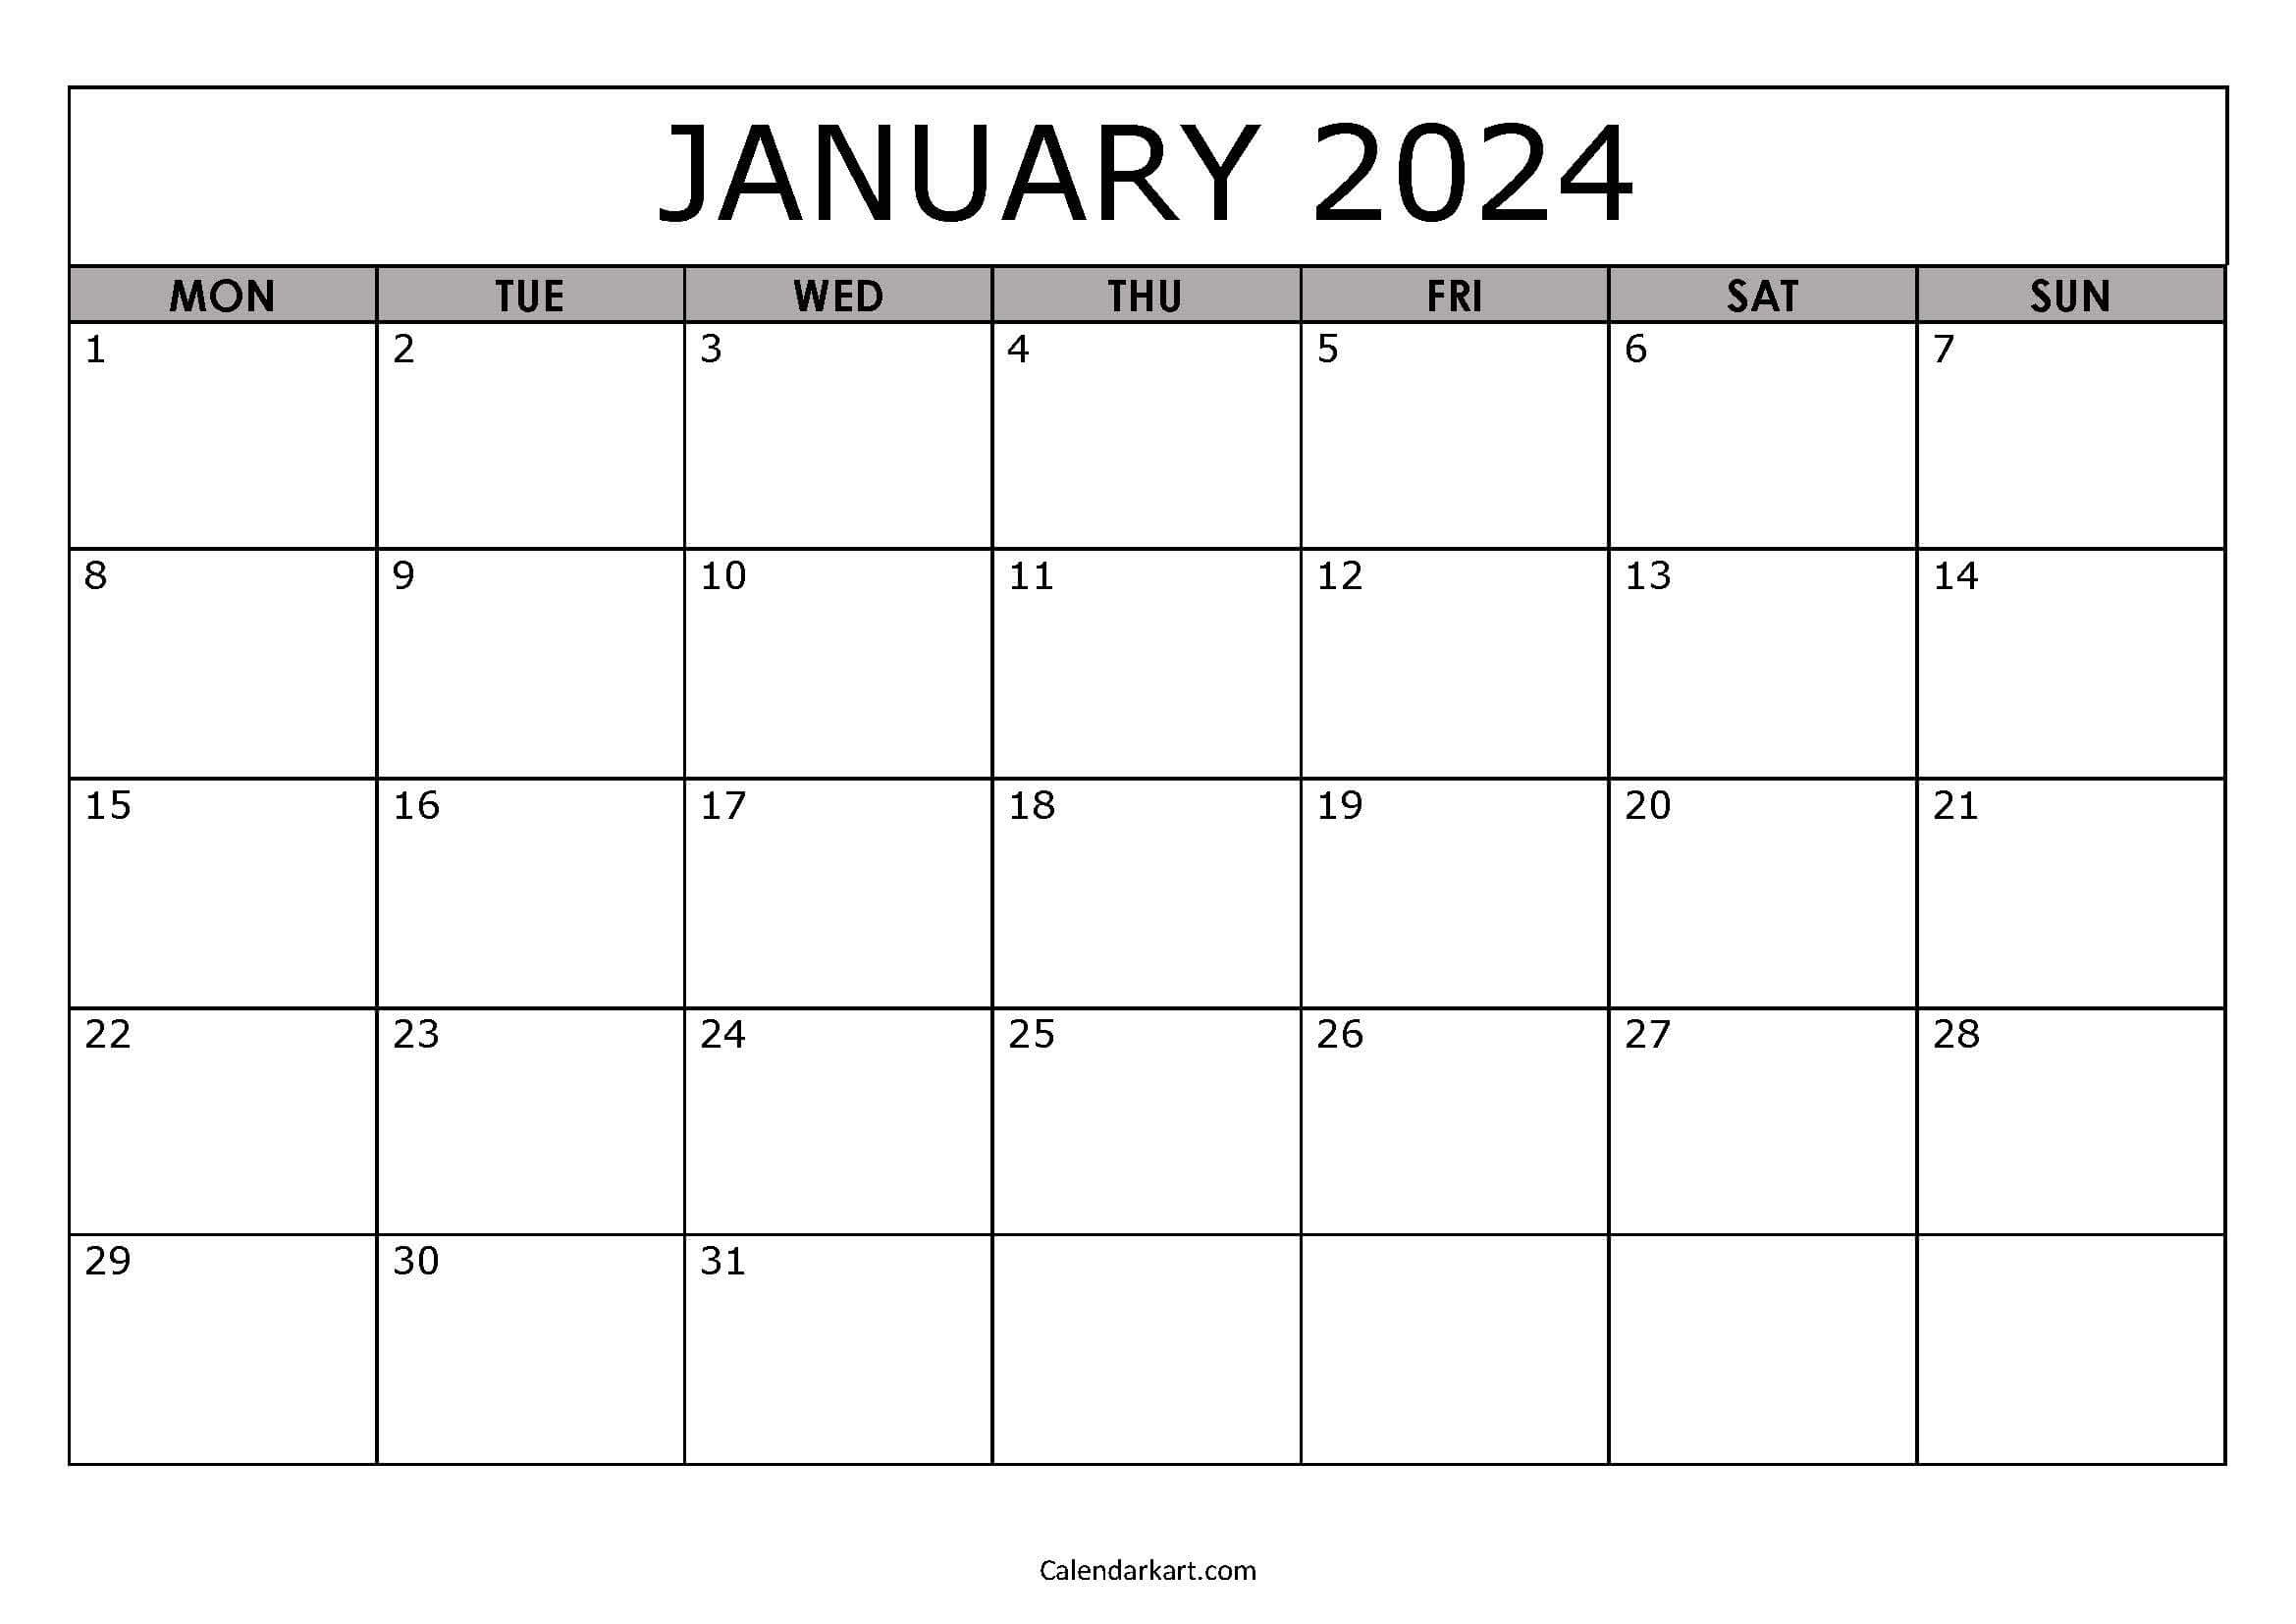 Free Printable January 2024 Calendars - Calendarkart | Printable Calendar January 2024 Monday Start